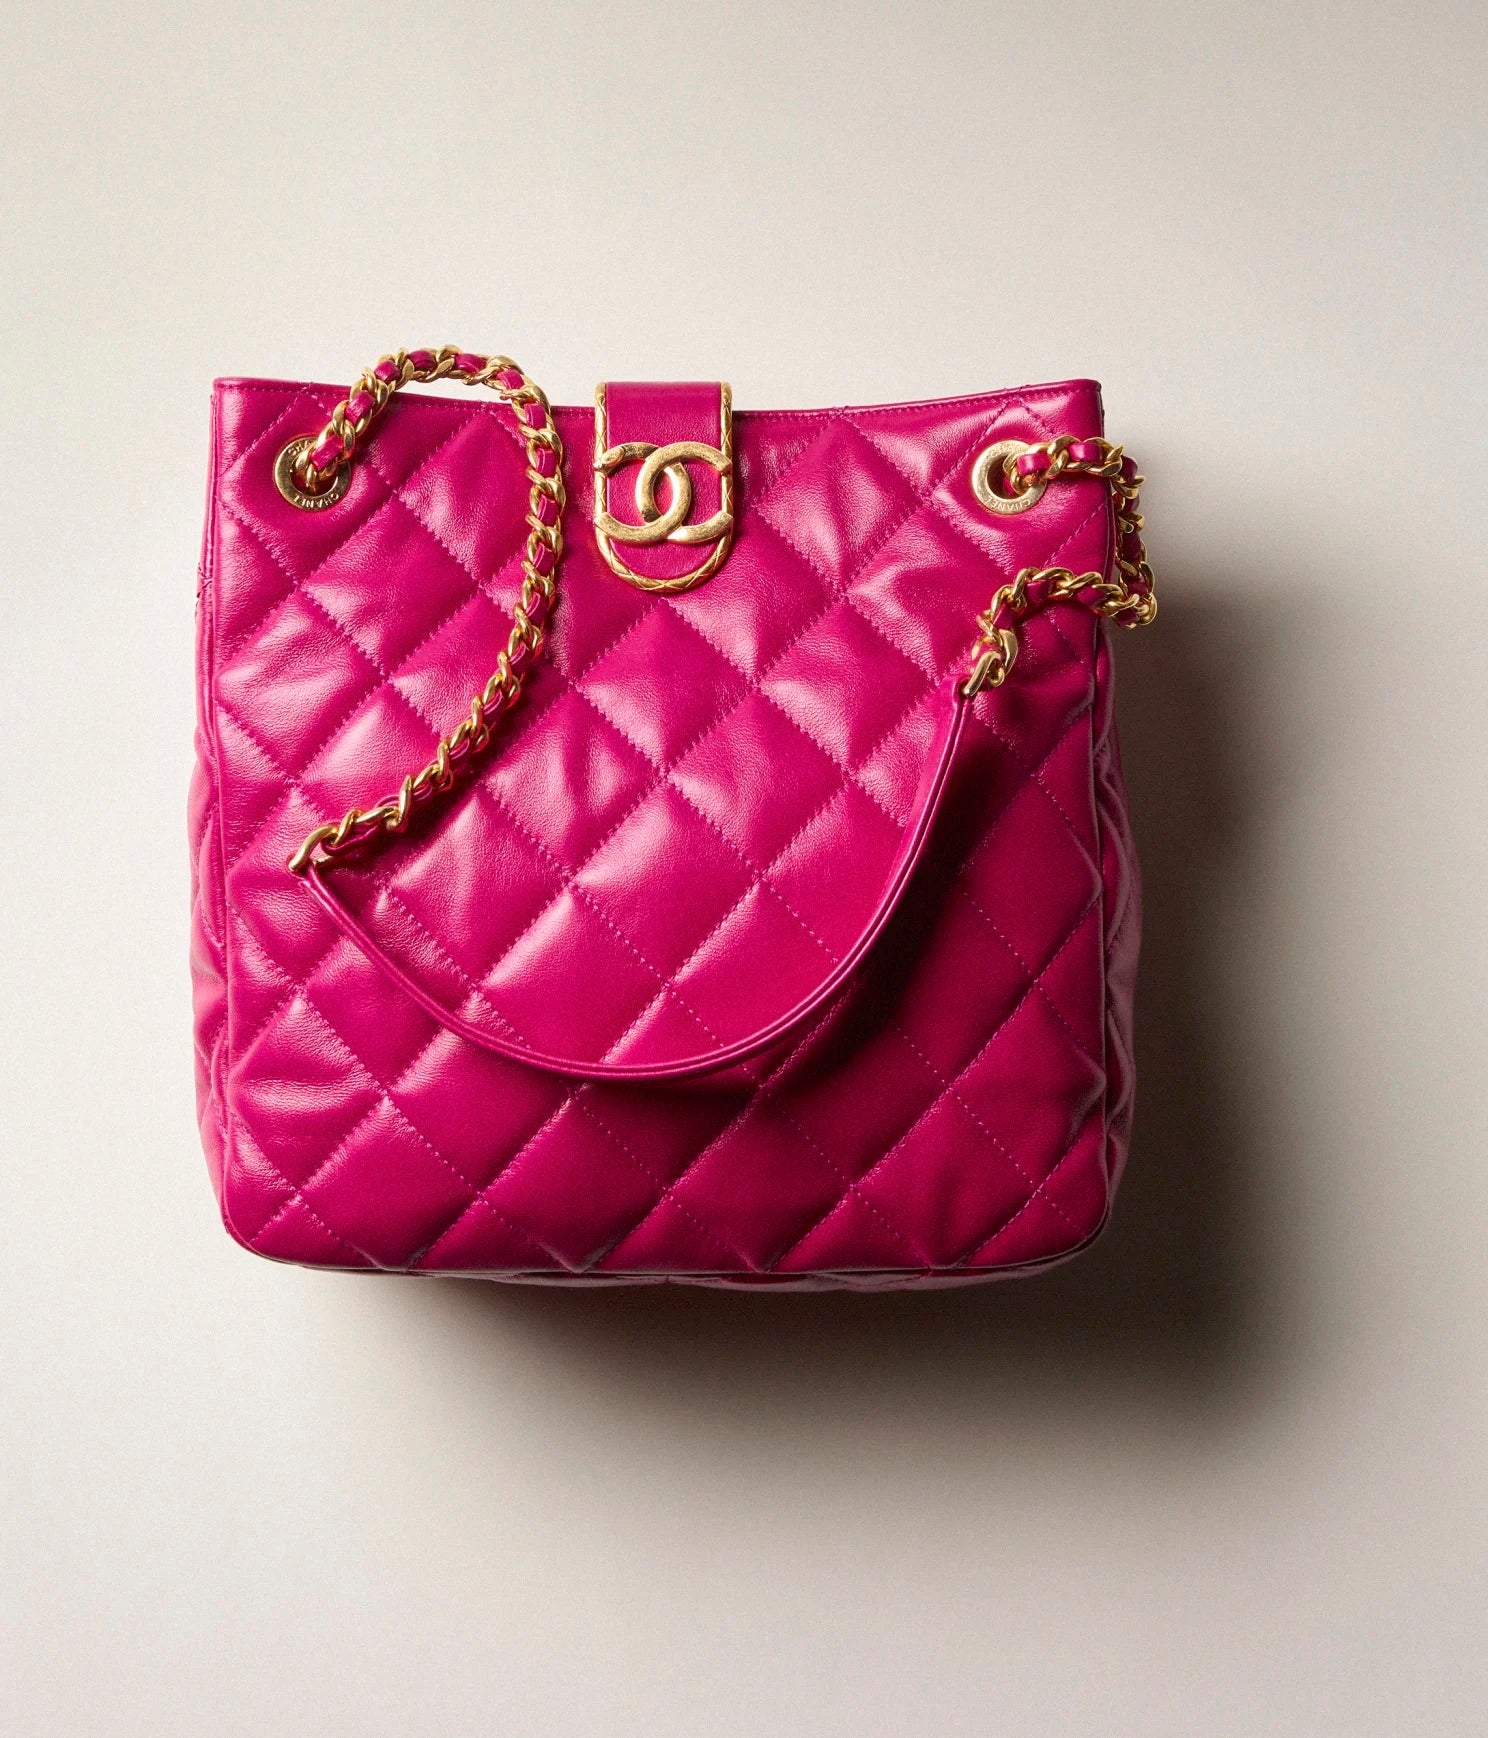 chanel handbag fal-winter 2022/23 pre-collection pink